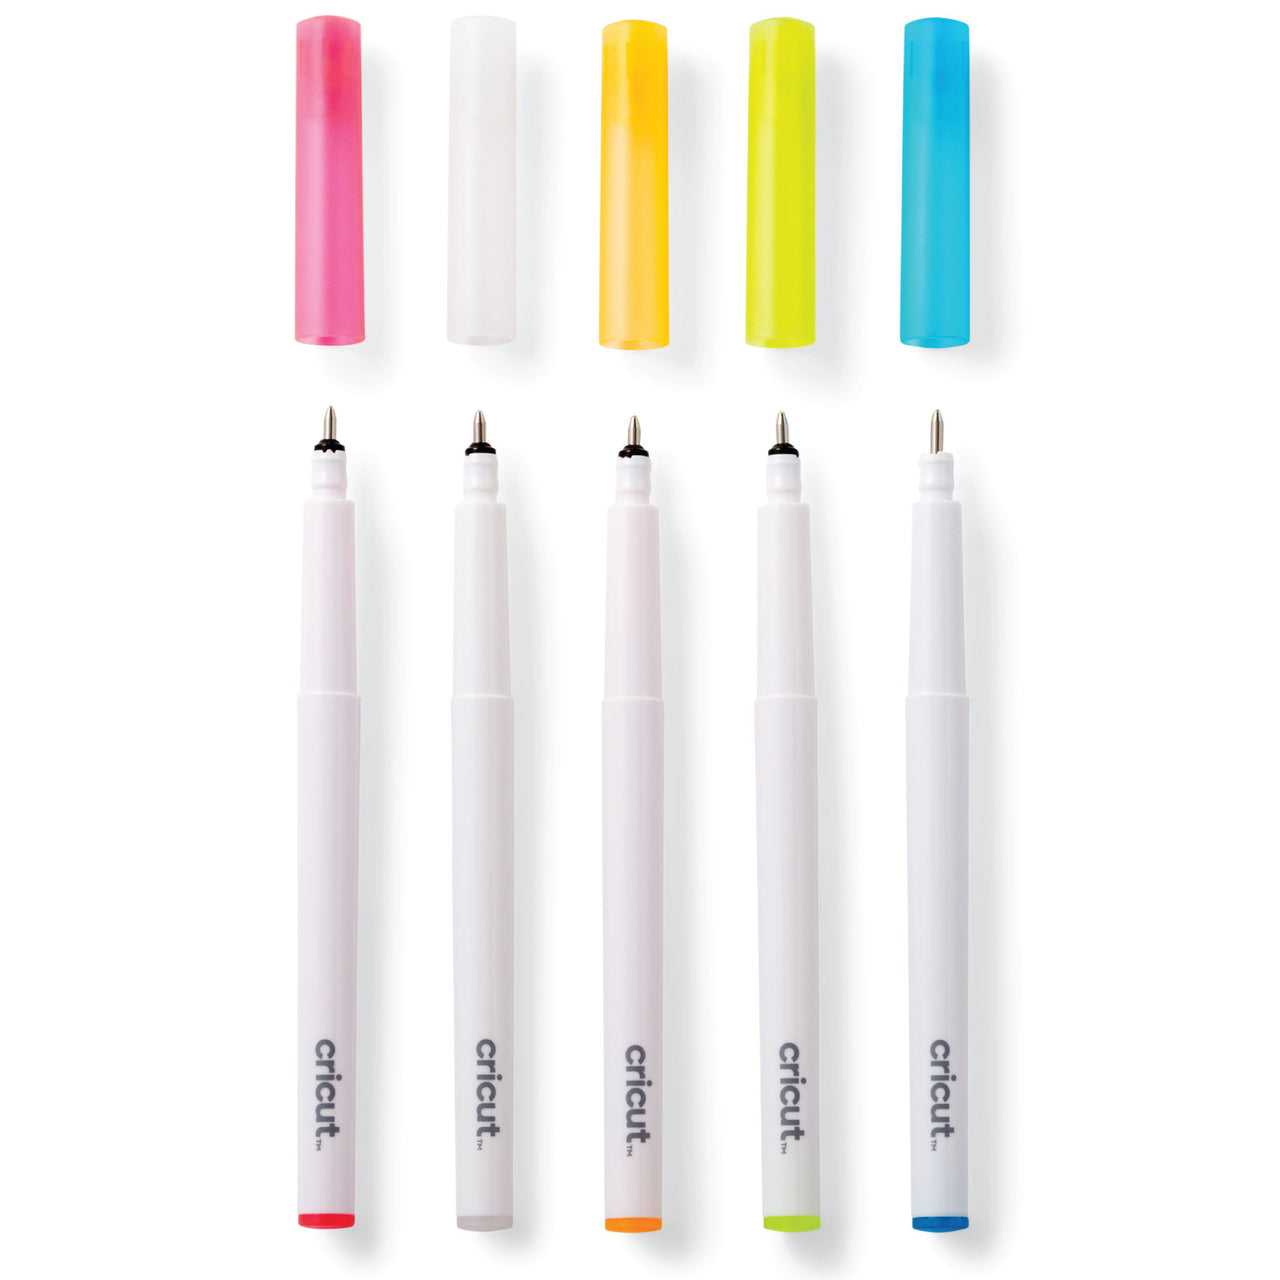 Cricut Opaque Gel Pens 1.0 mm - Pink, White, Orange, Yellow, Blue 5 ct - Damaged Package